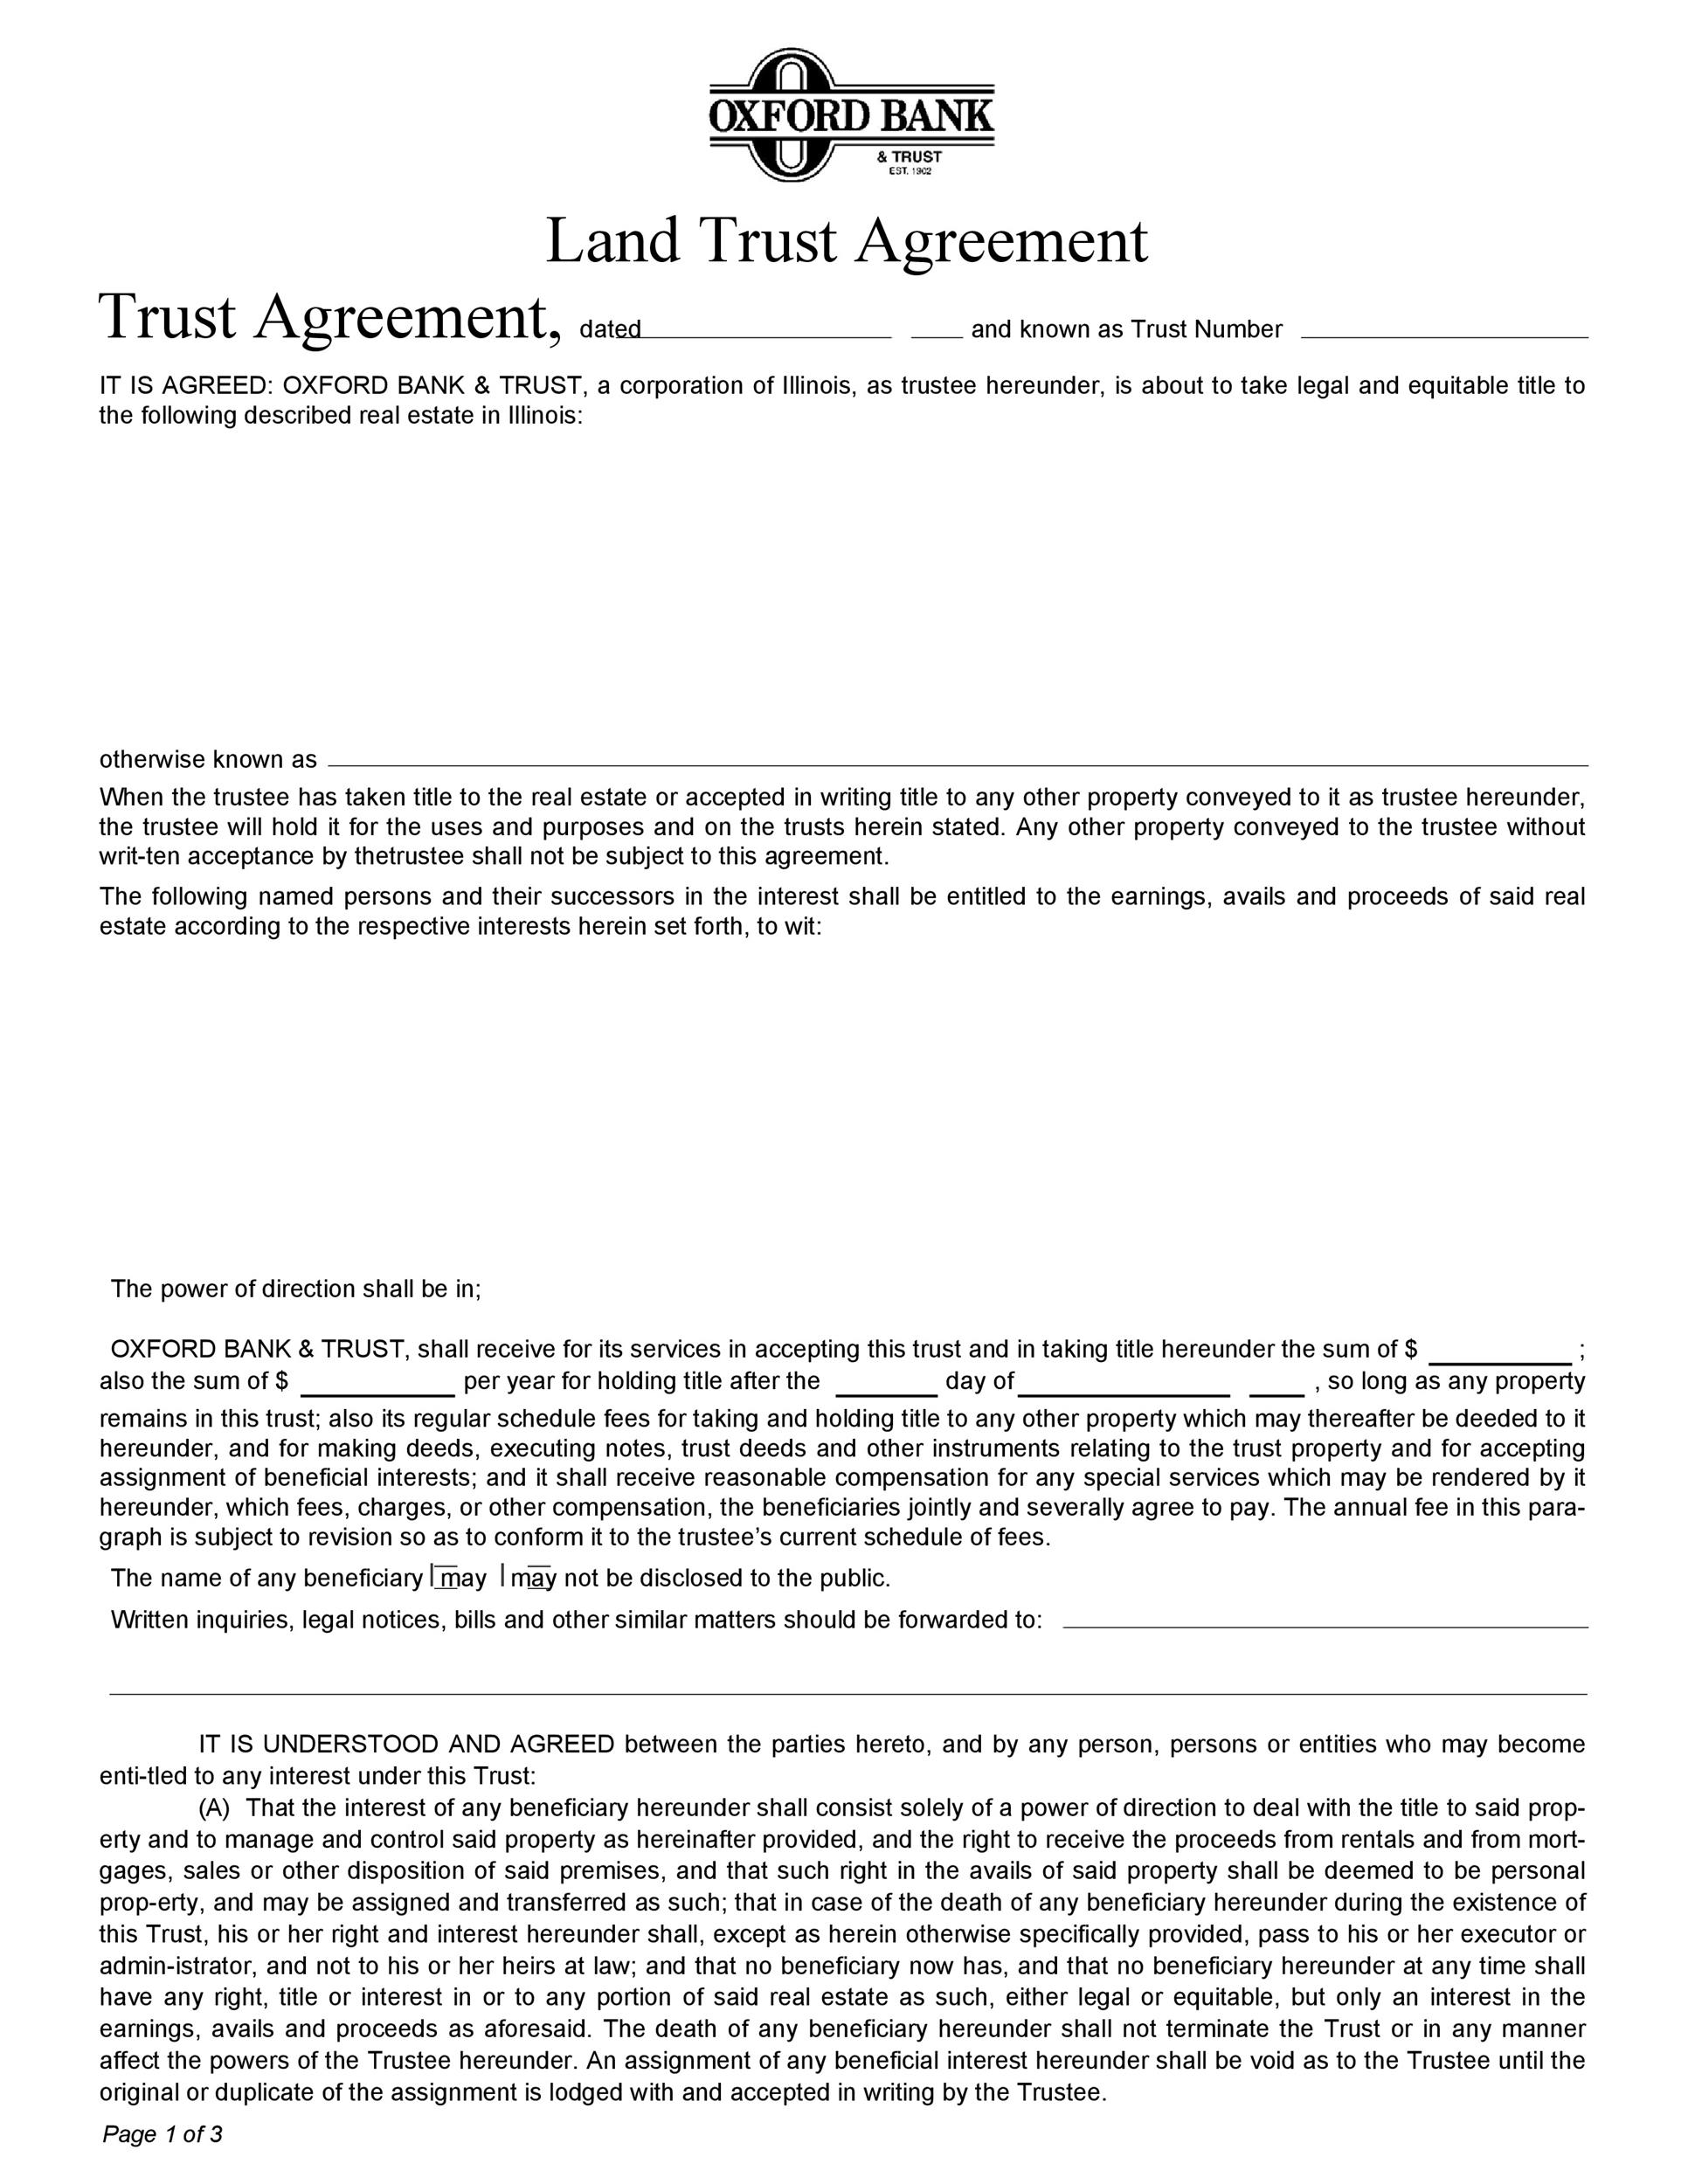 50 Professional Trust Agreement Templates [& Forms] ᐅ TemplateLab